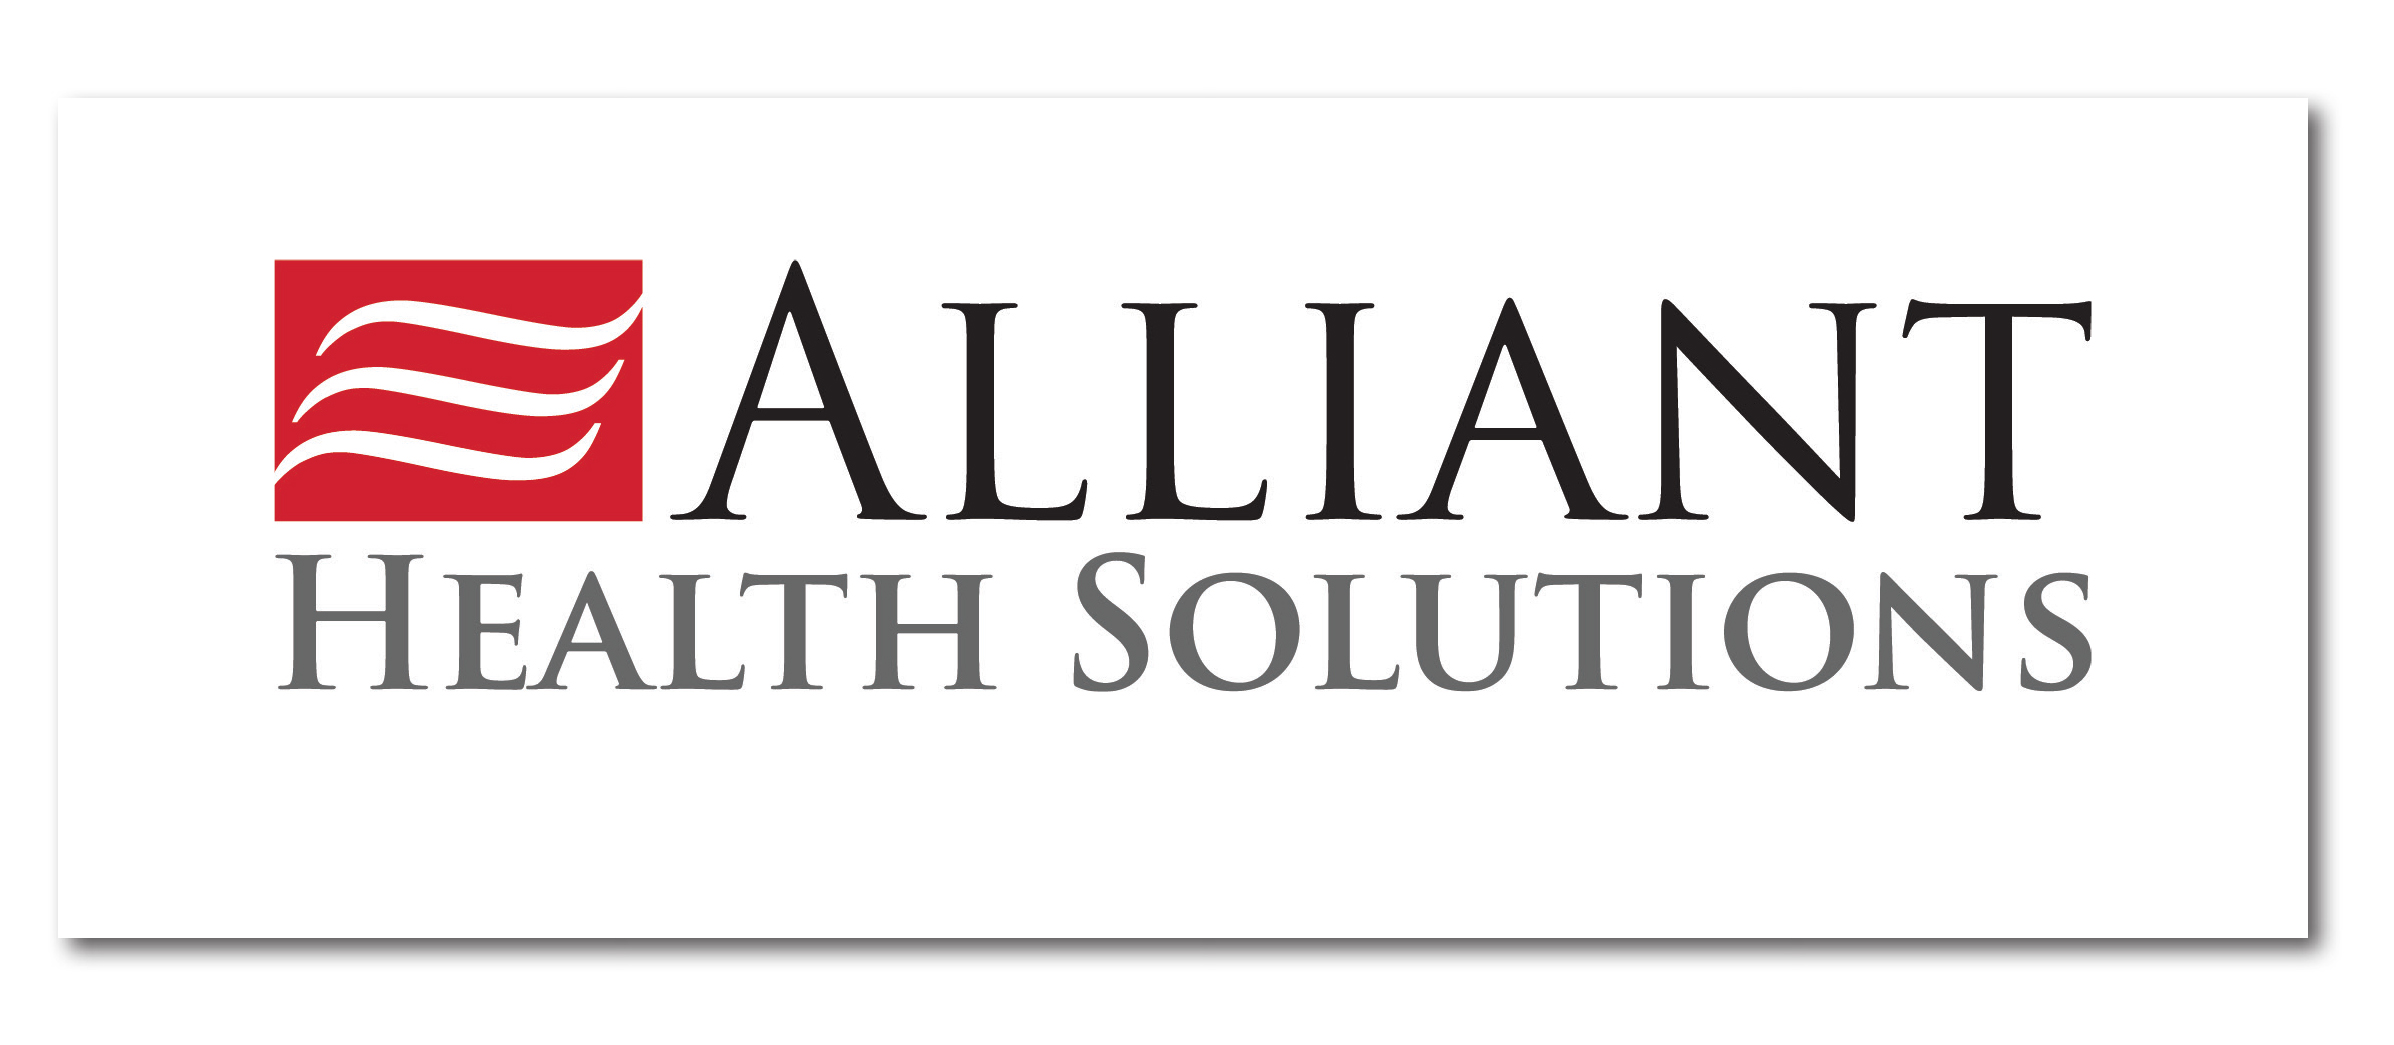 alliant-health-solutions-to-replace-eqhealth-solutions-as-medicaid-um-qio-vendor-mississippi